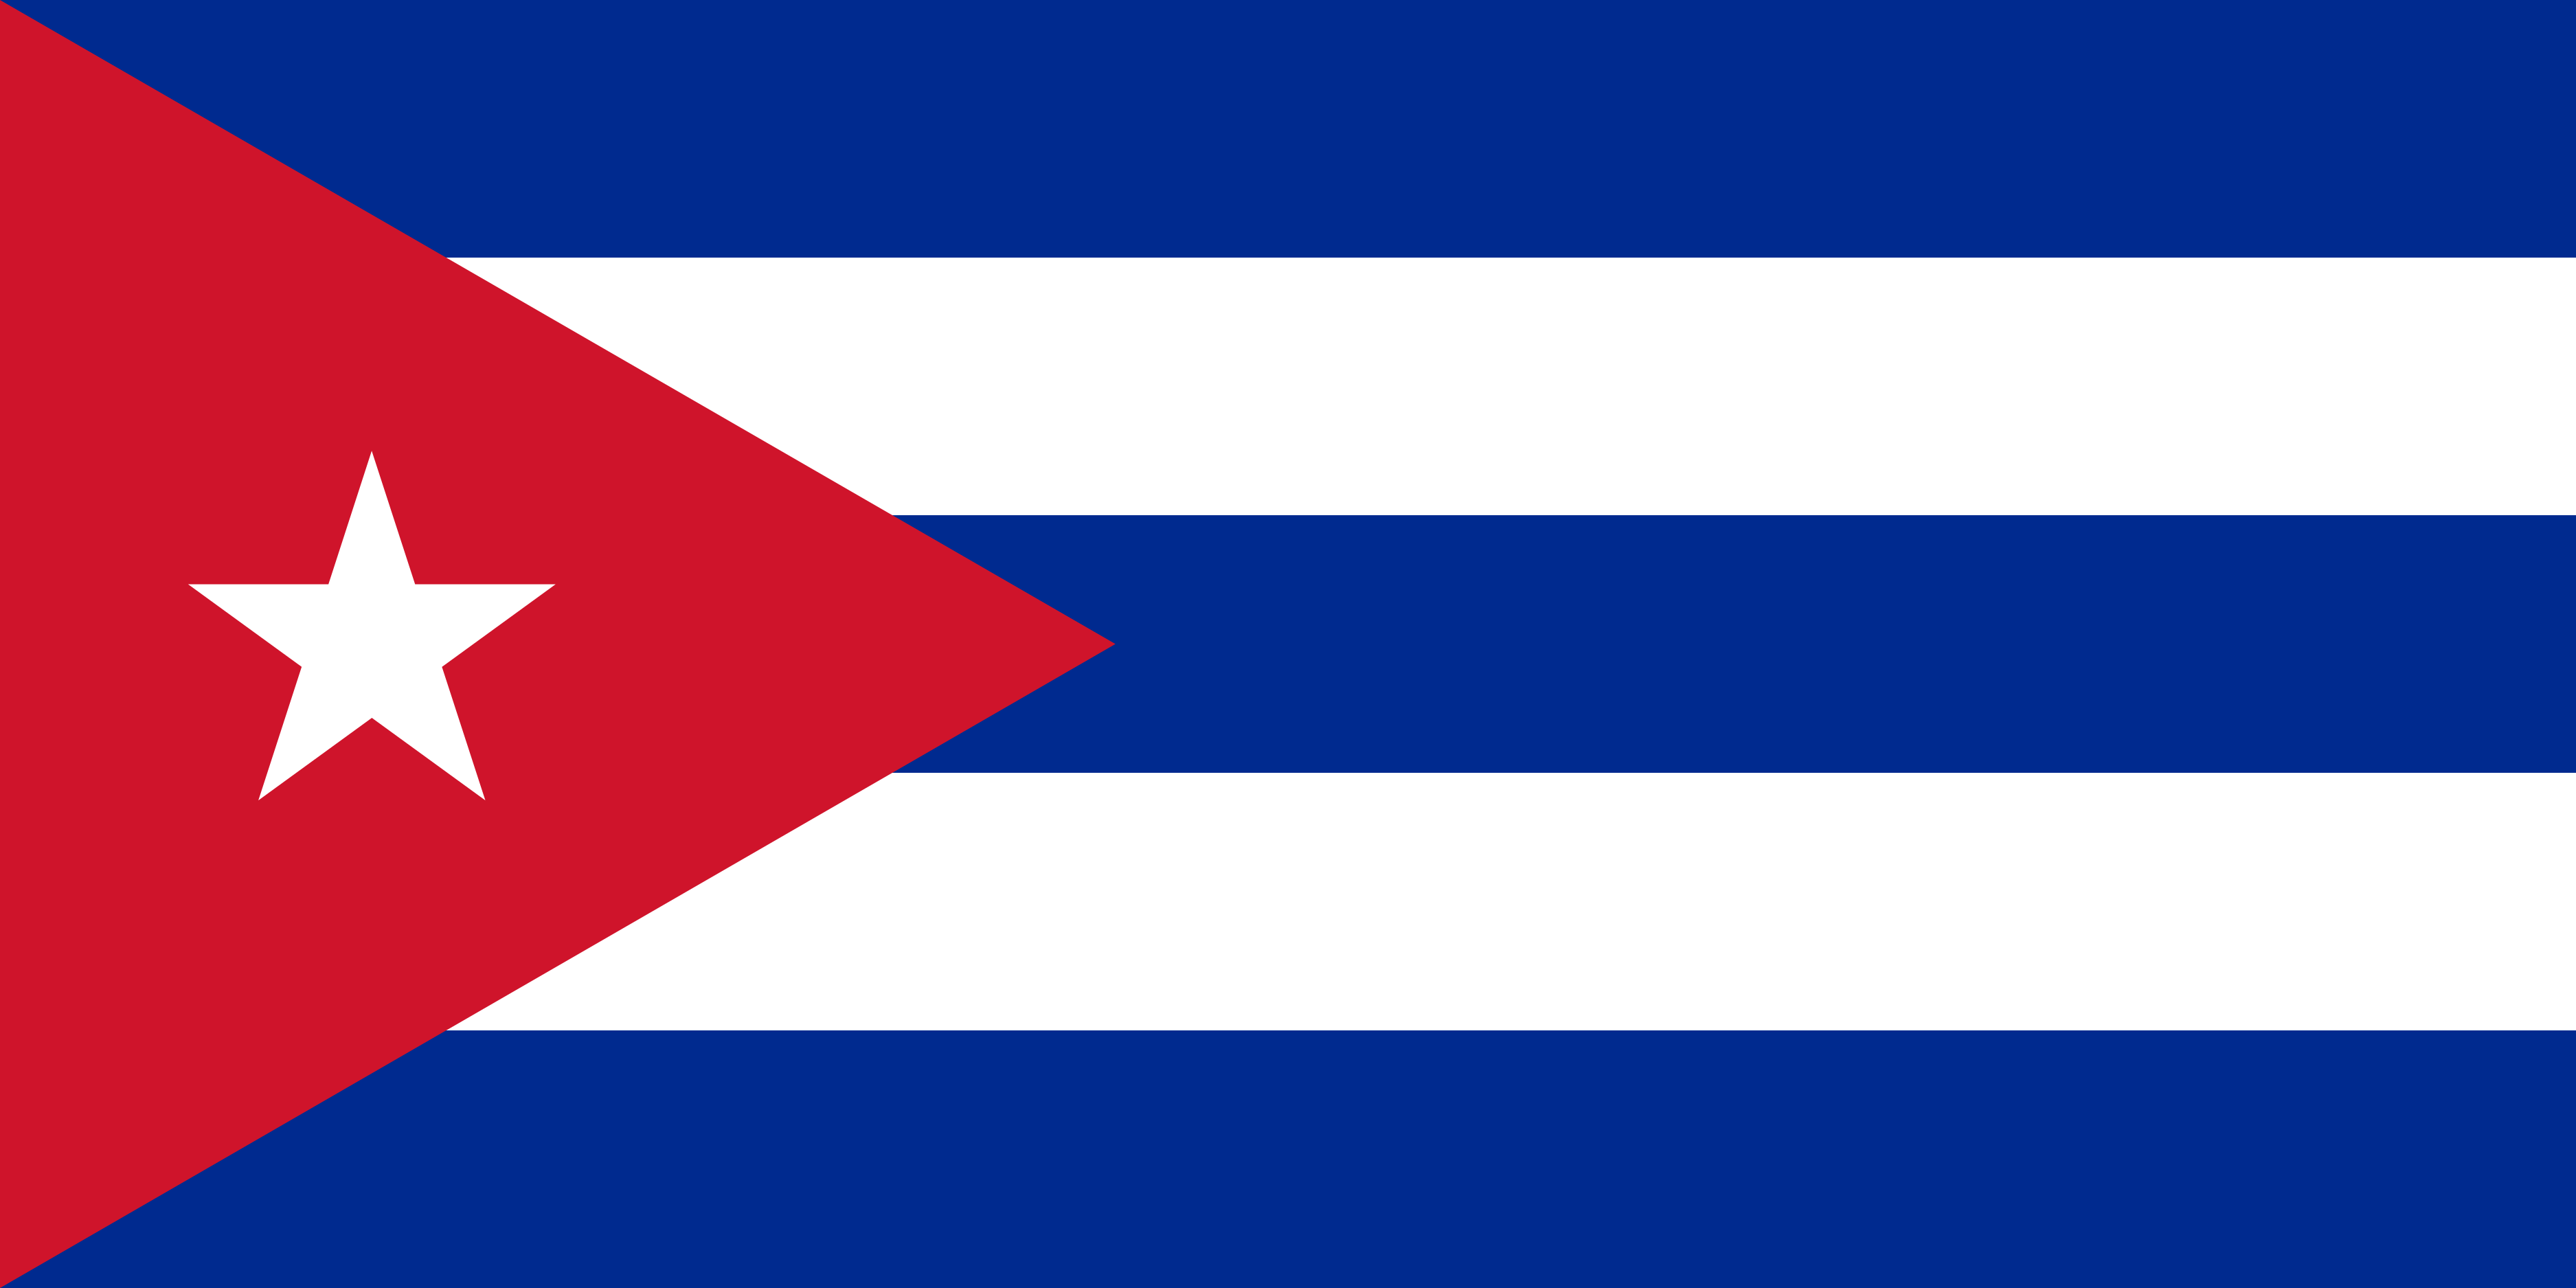 Cuba Flag Image - Free Download